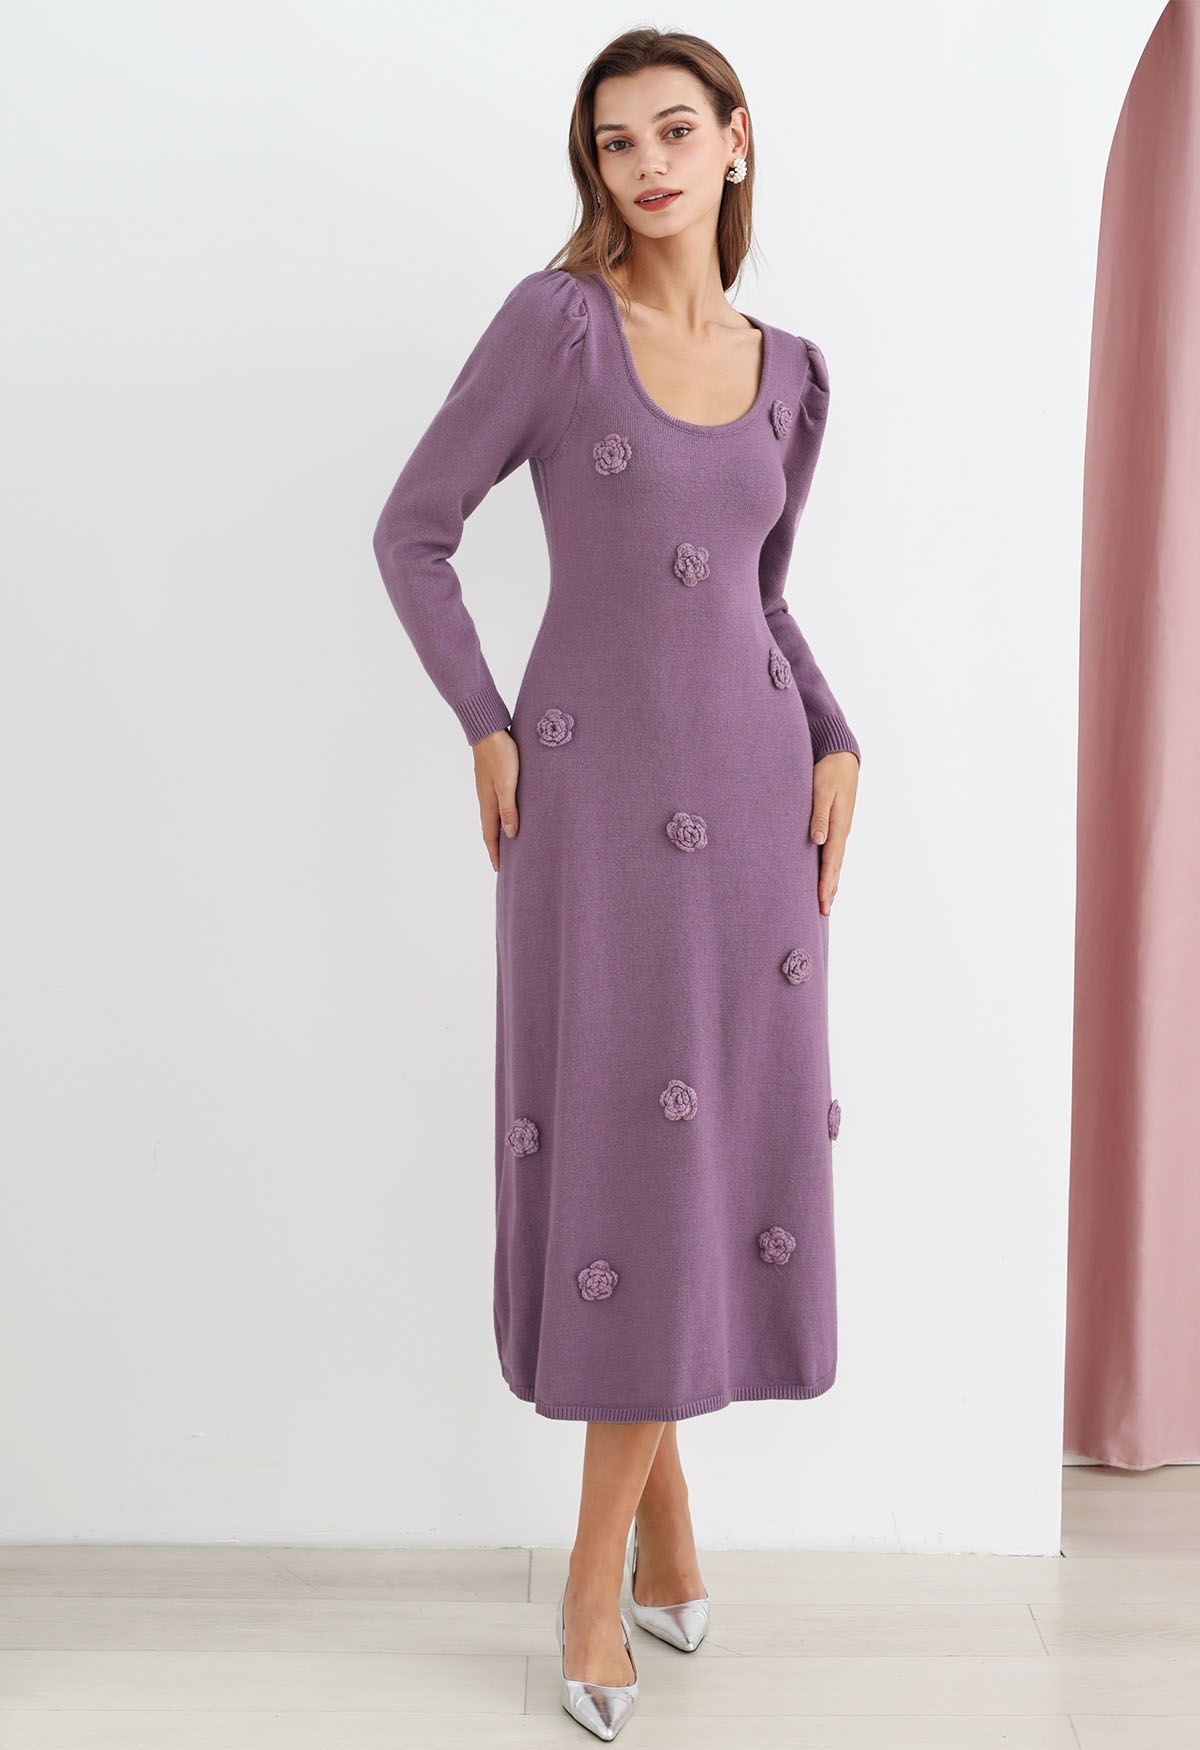 Scoop Neck Stitch Flower Knit Dress in Lilac